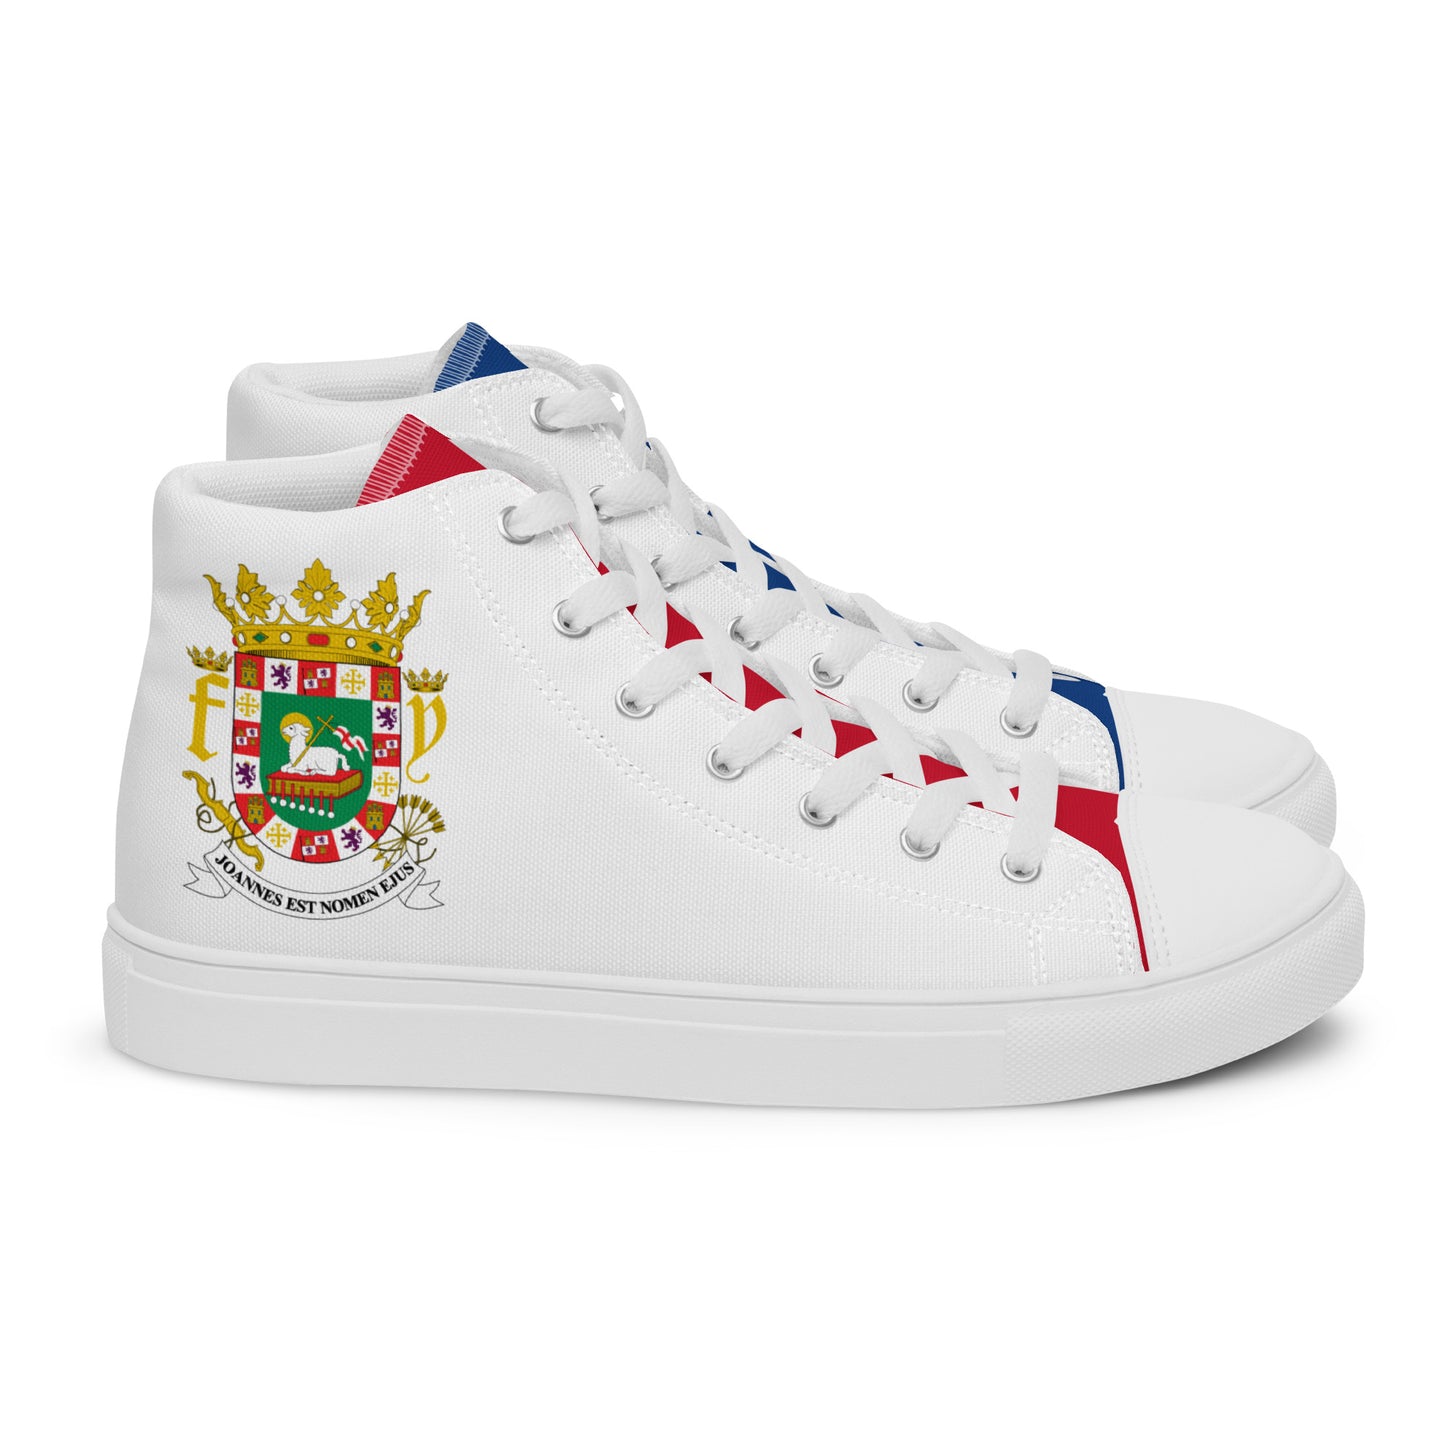 Puerto Rico - Men - White - High top shoes